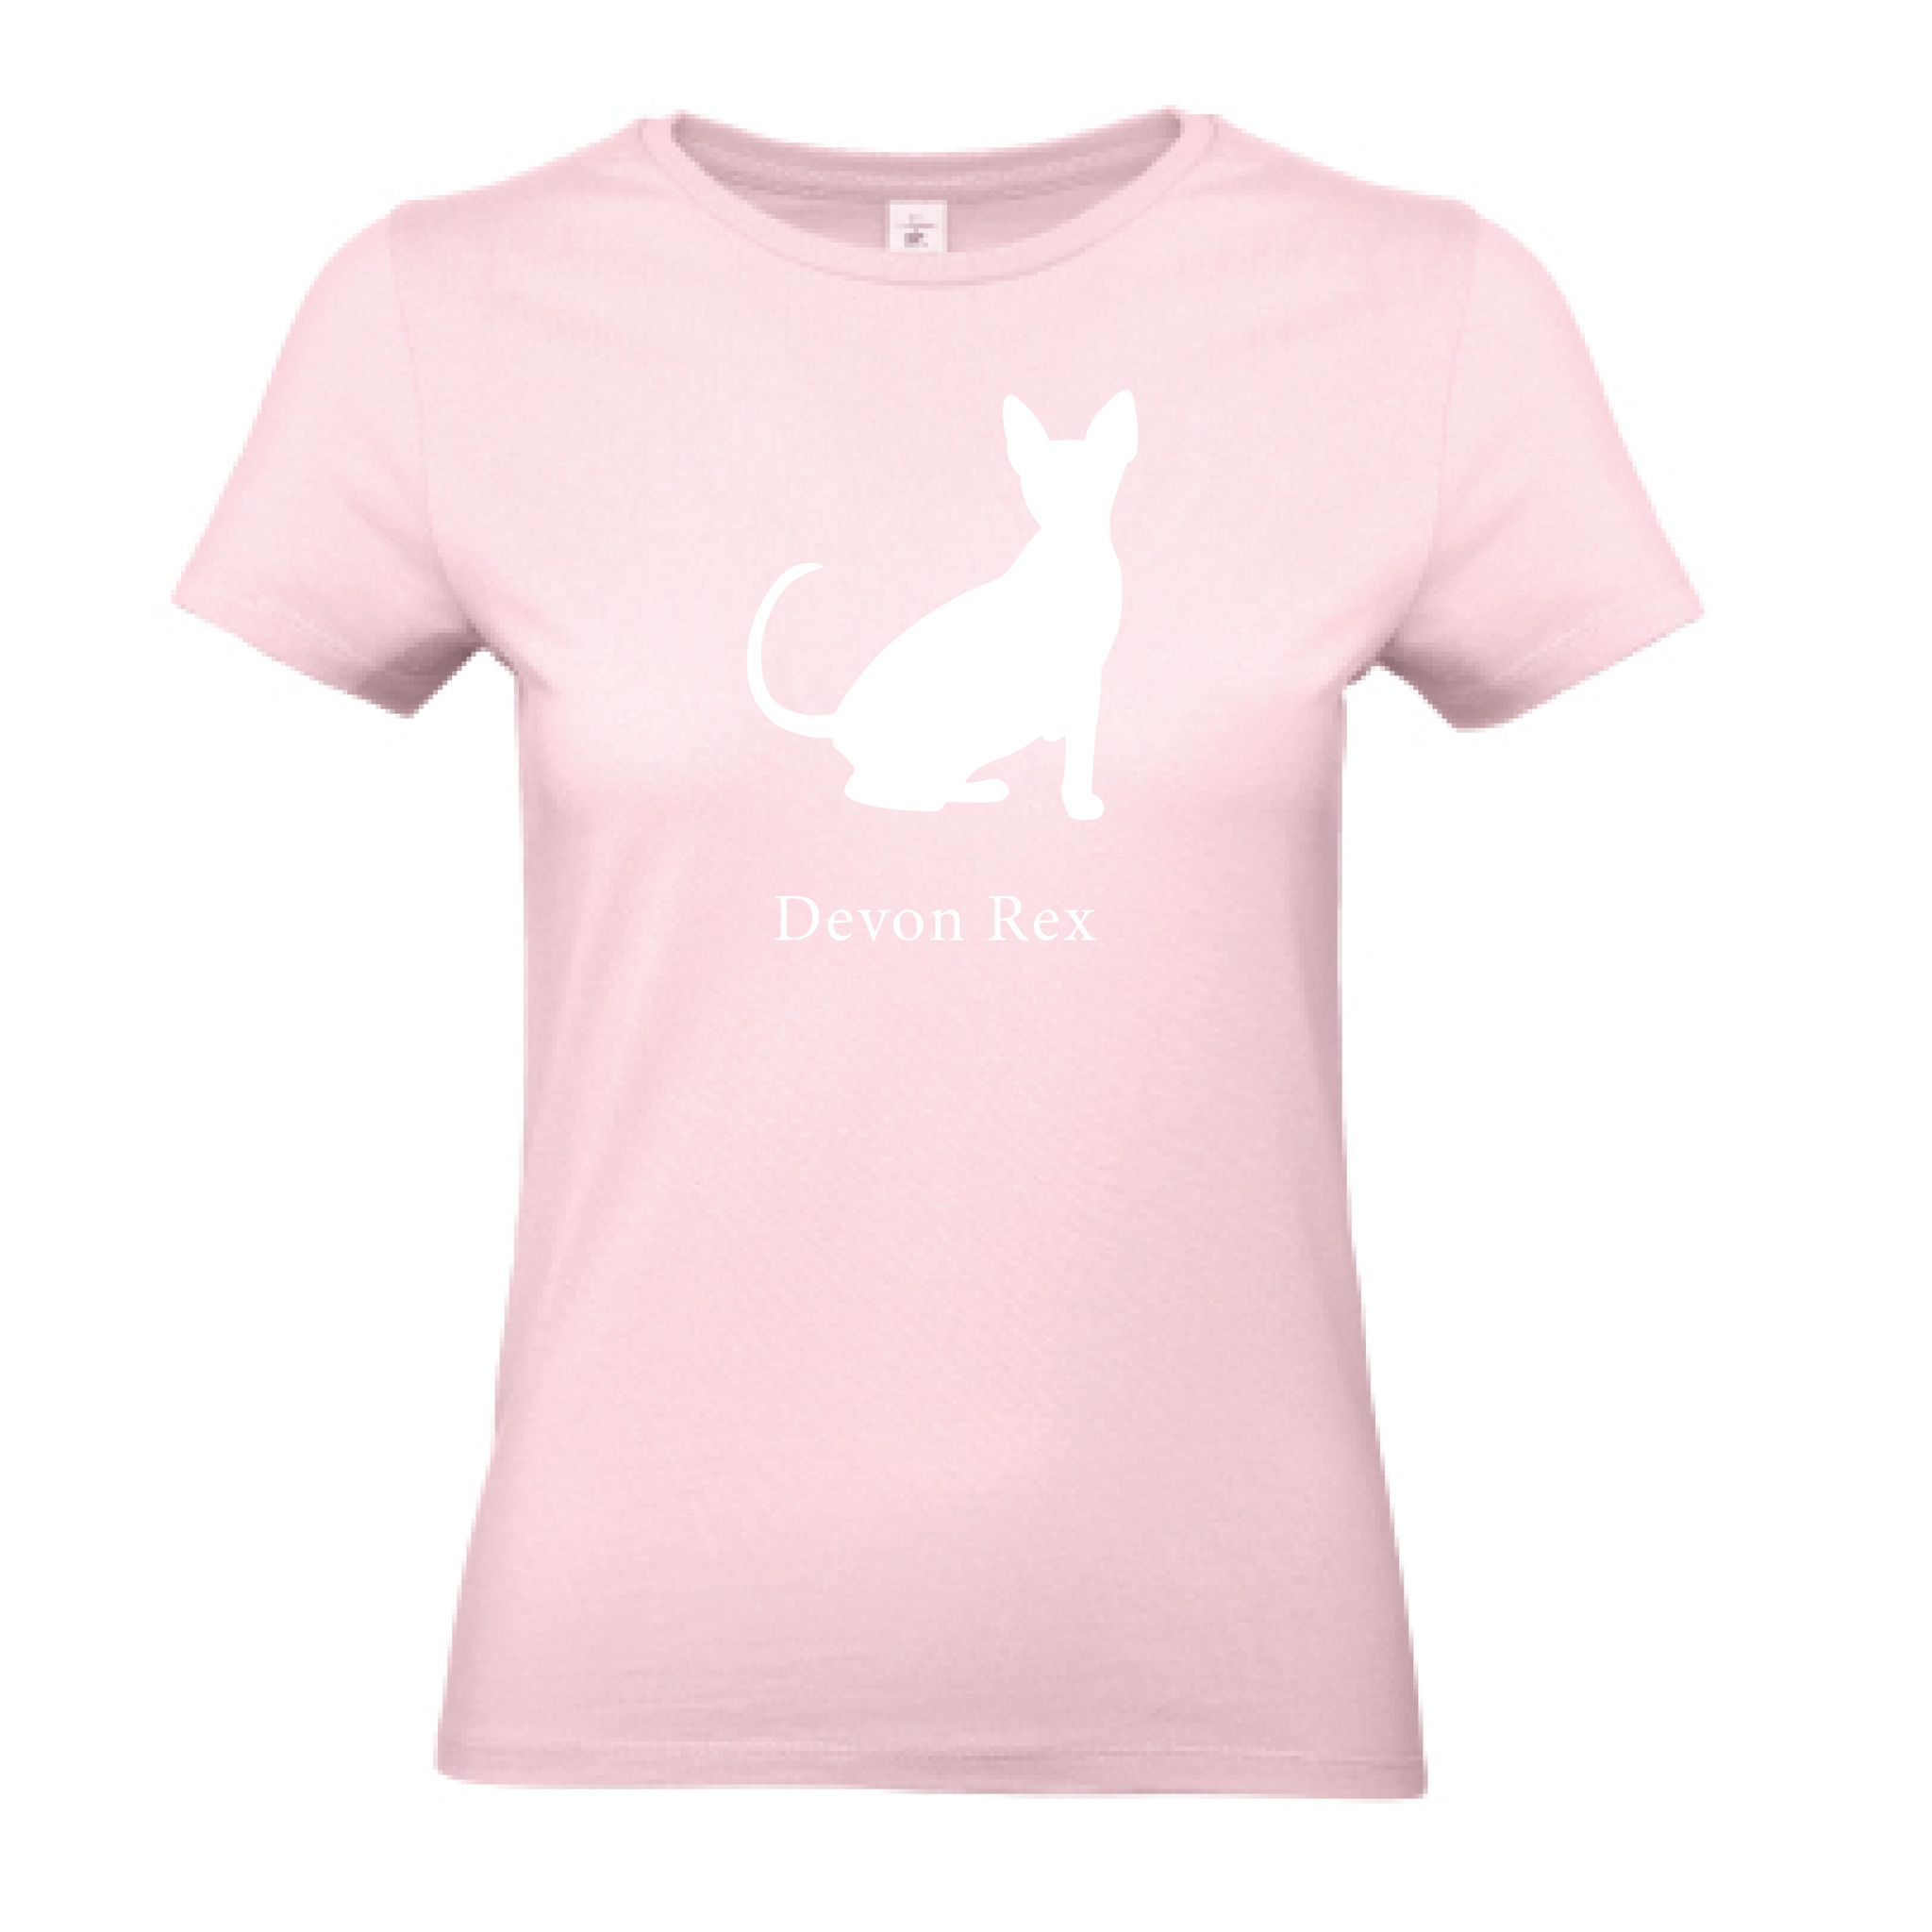 T-shirt Figursydd, Kattraser - Orchid Pink